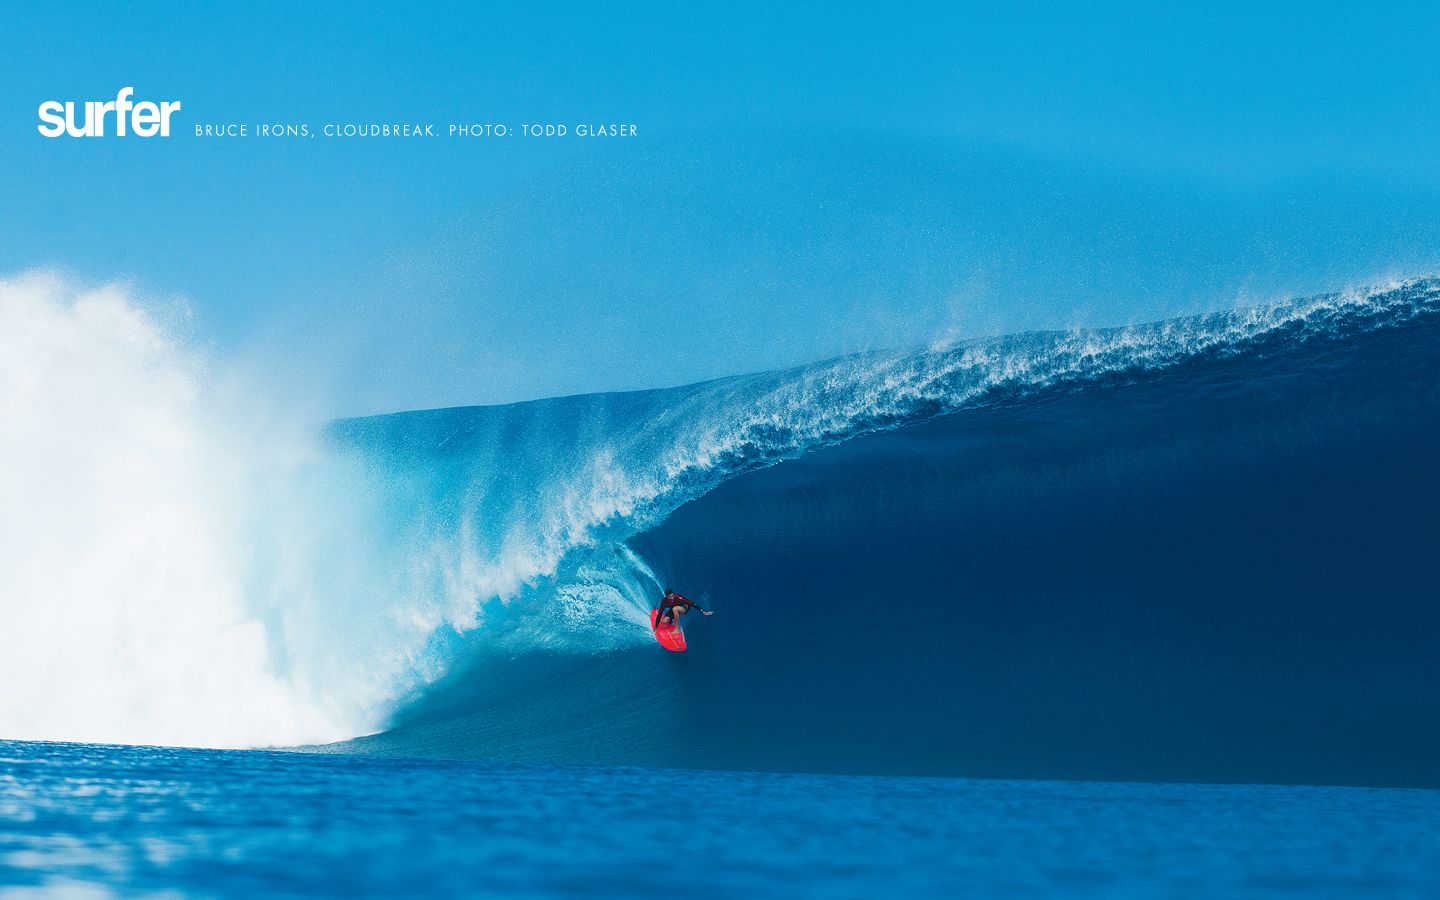 Craziest surfing barrel you've ever seen? - Non-Ski Gabber ...